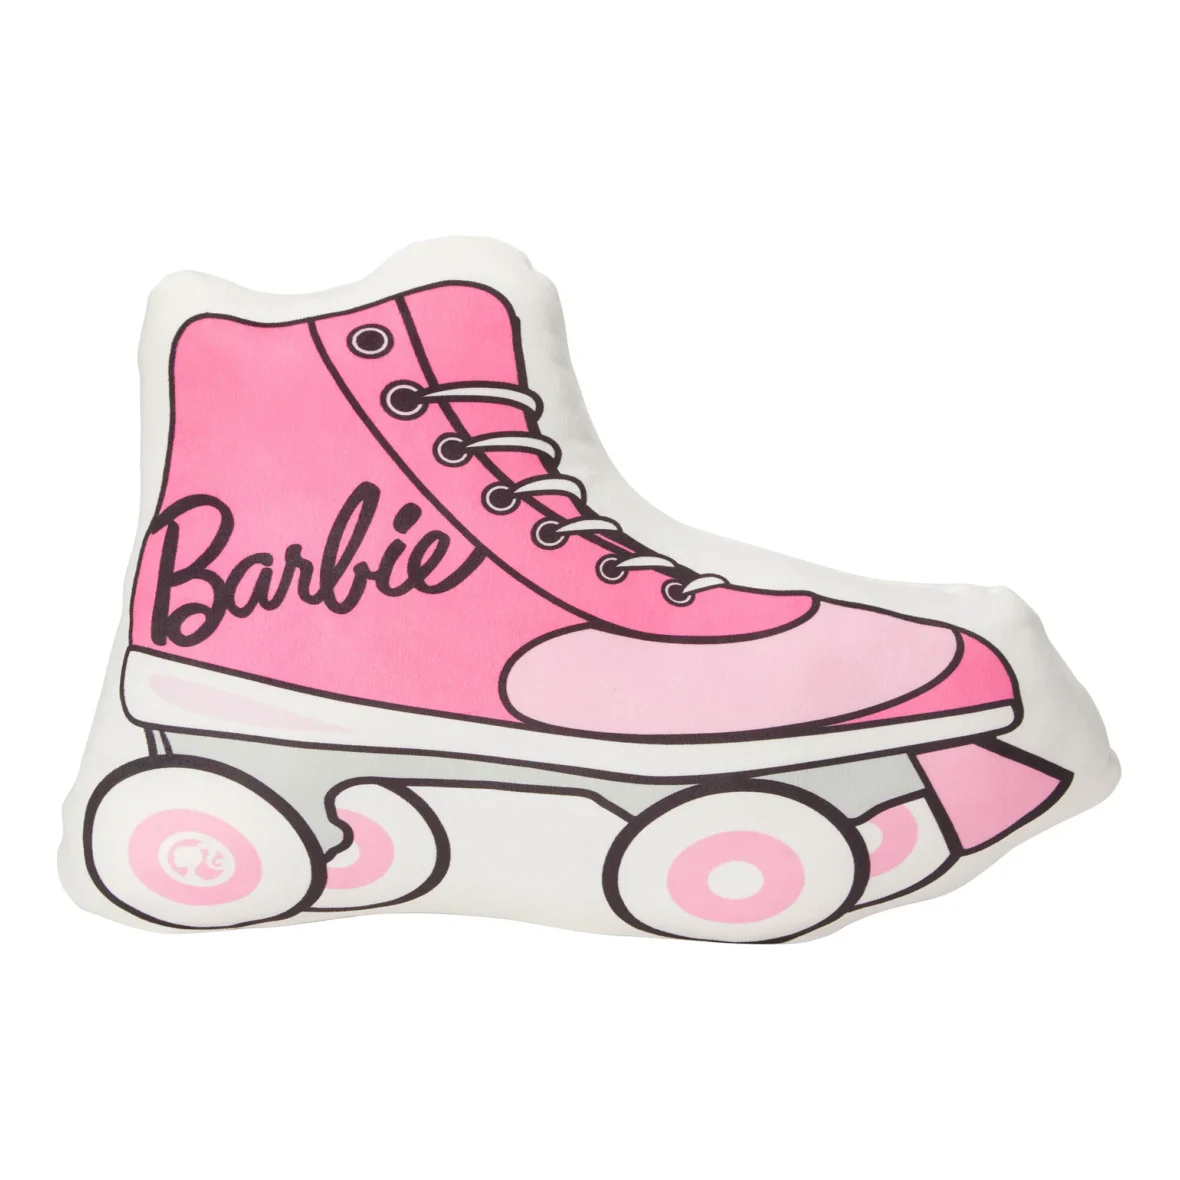 Barbie Roller Skate Kids Bedding Decorative Pillow, Pink